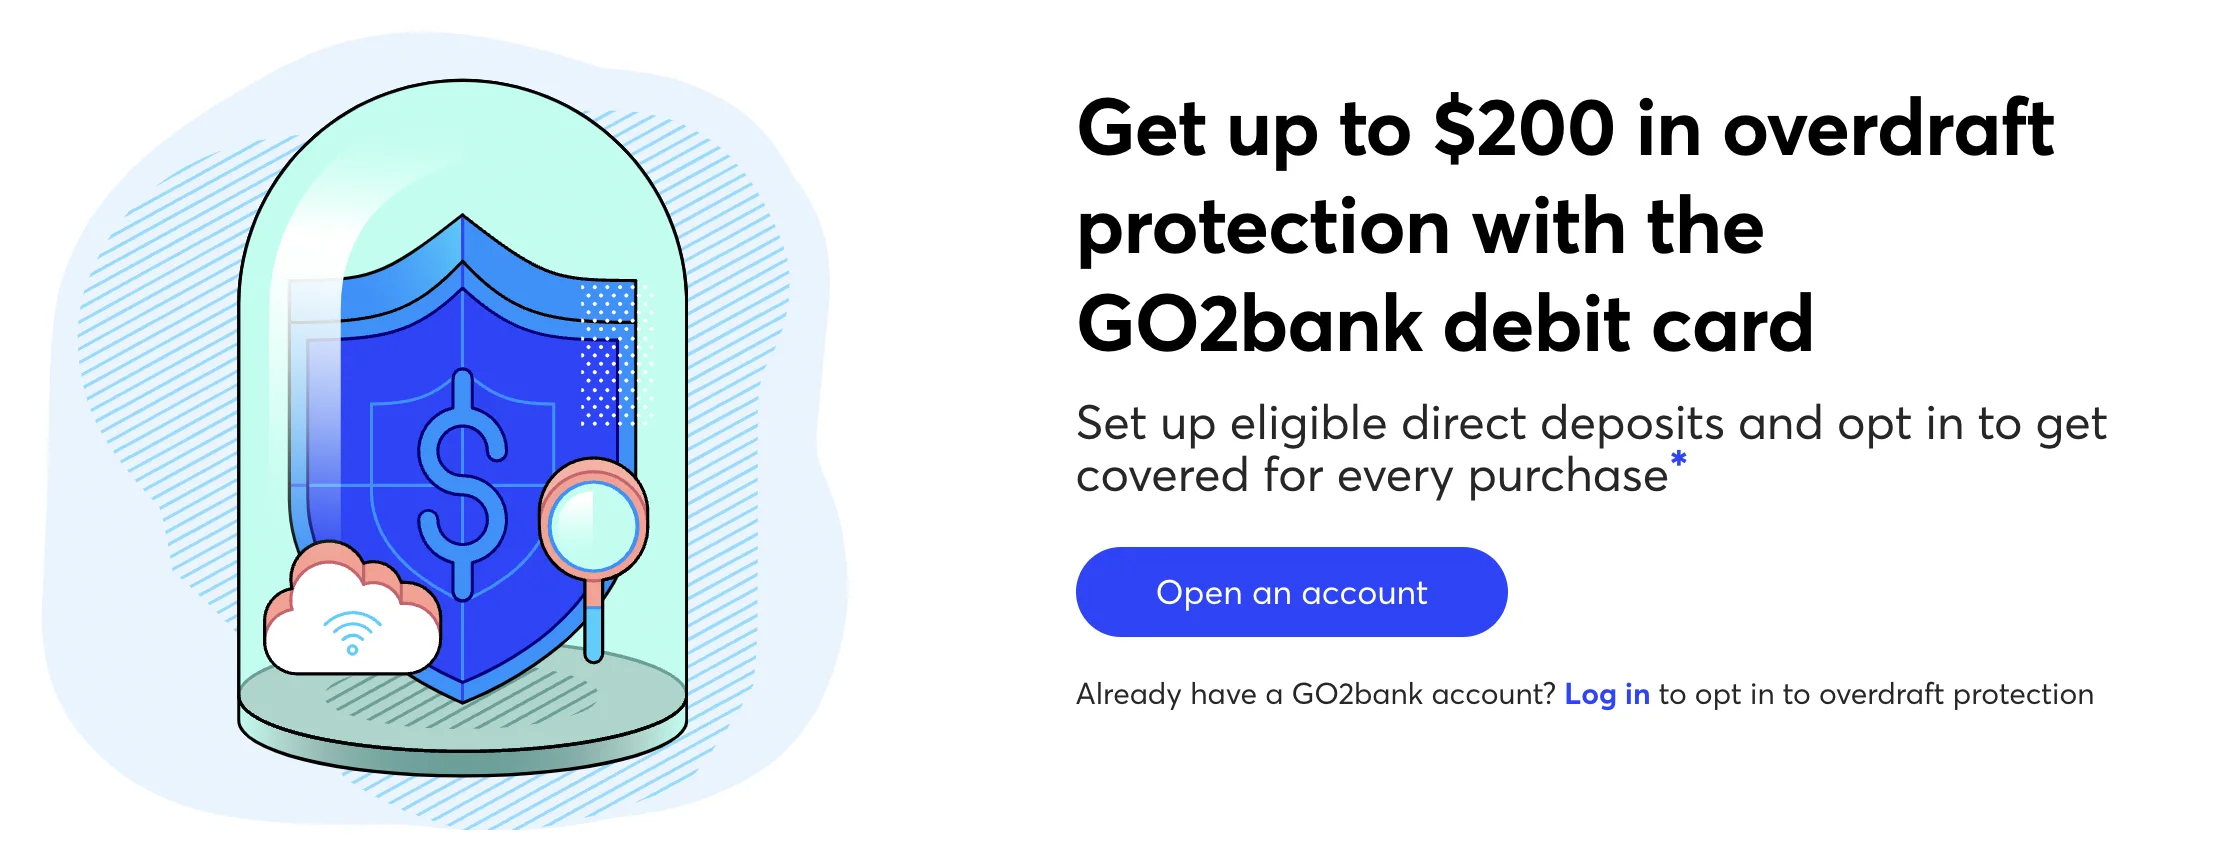 Go2bank Overdraft Protection